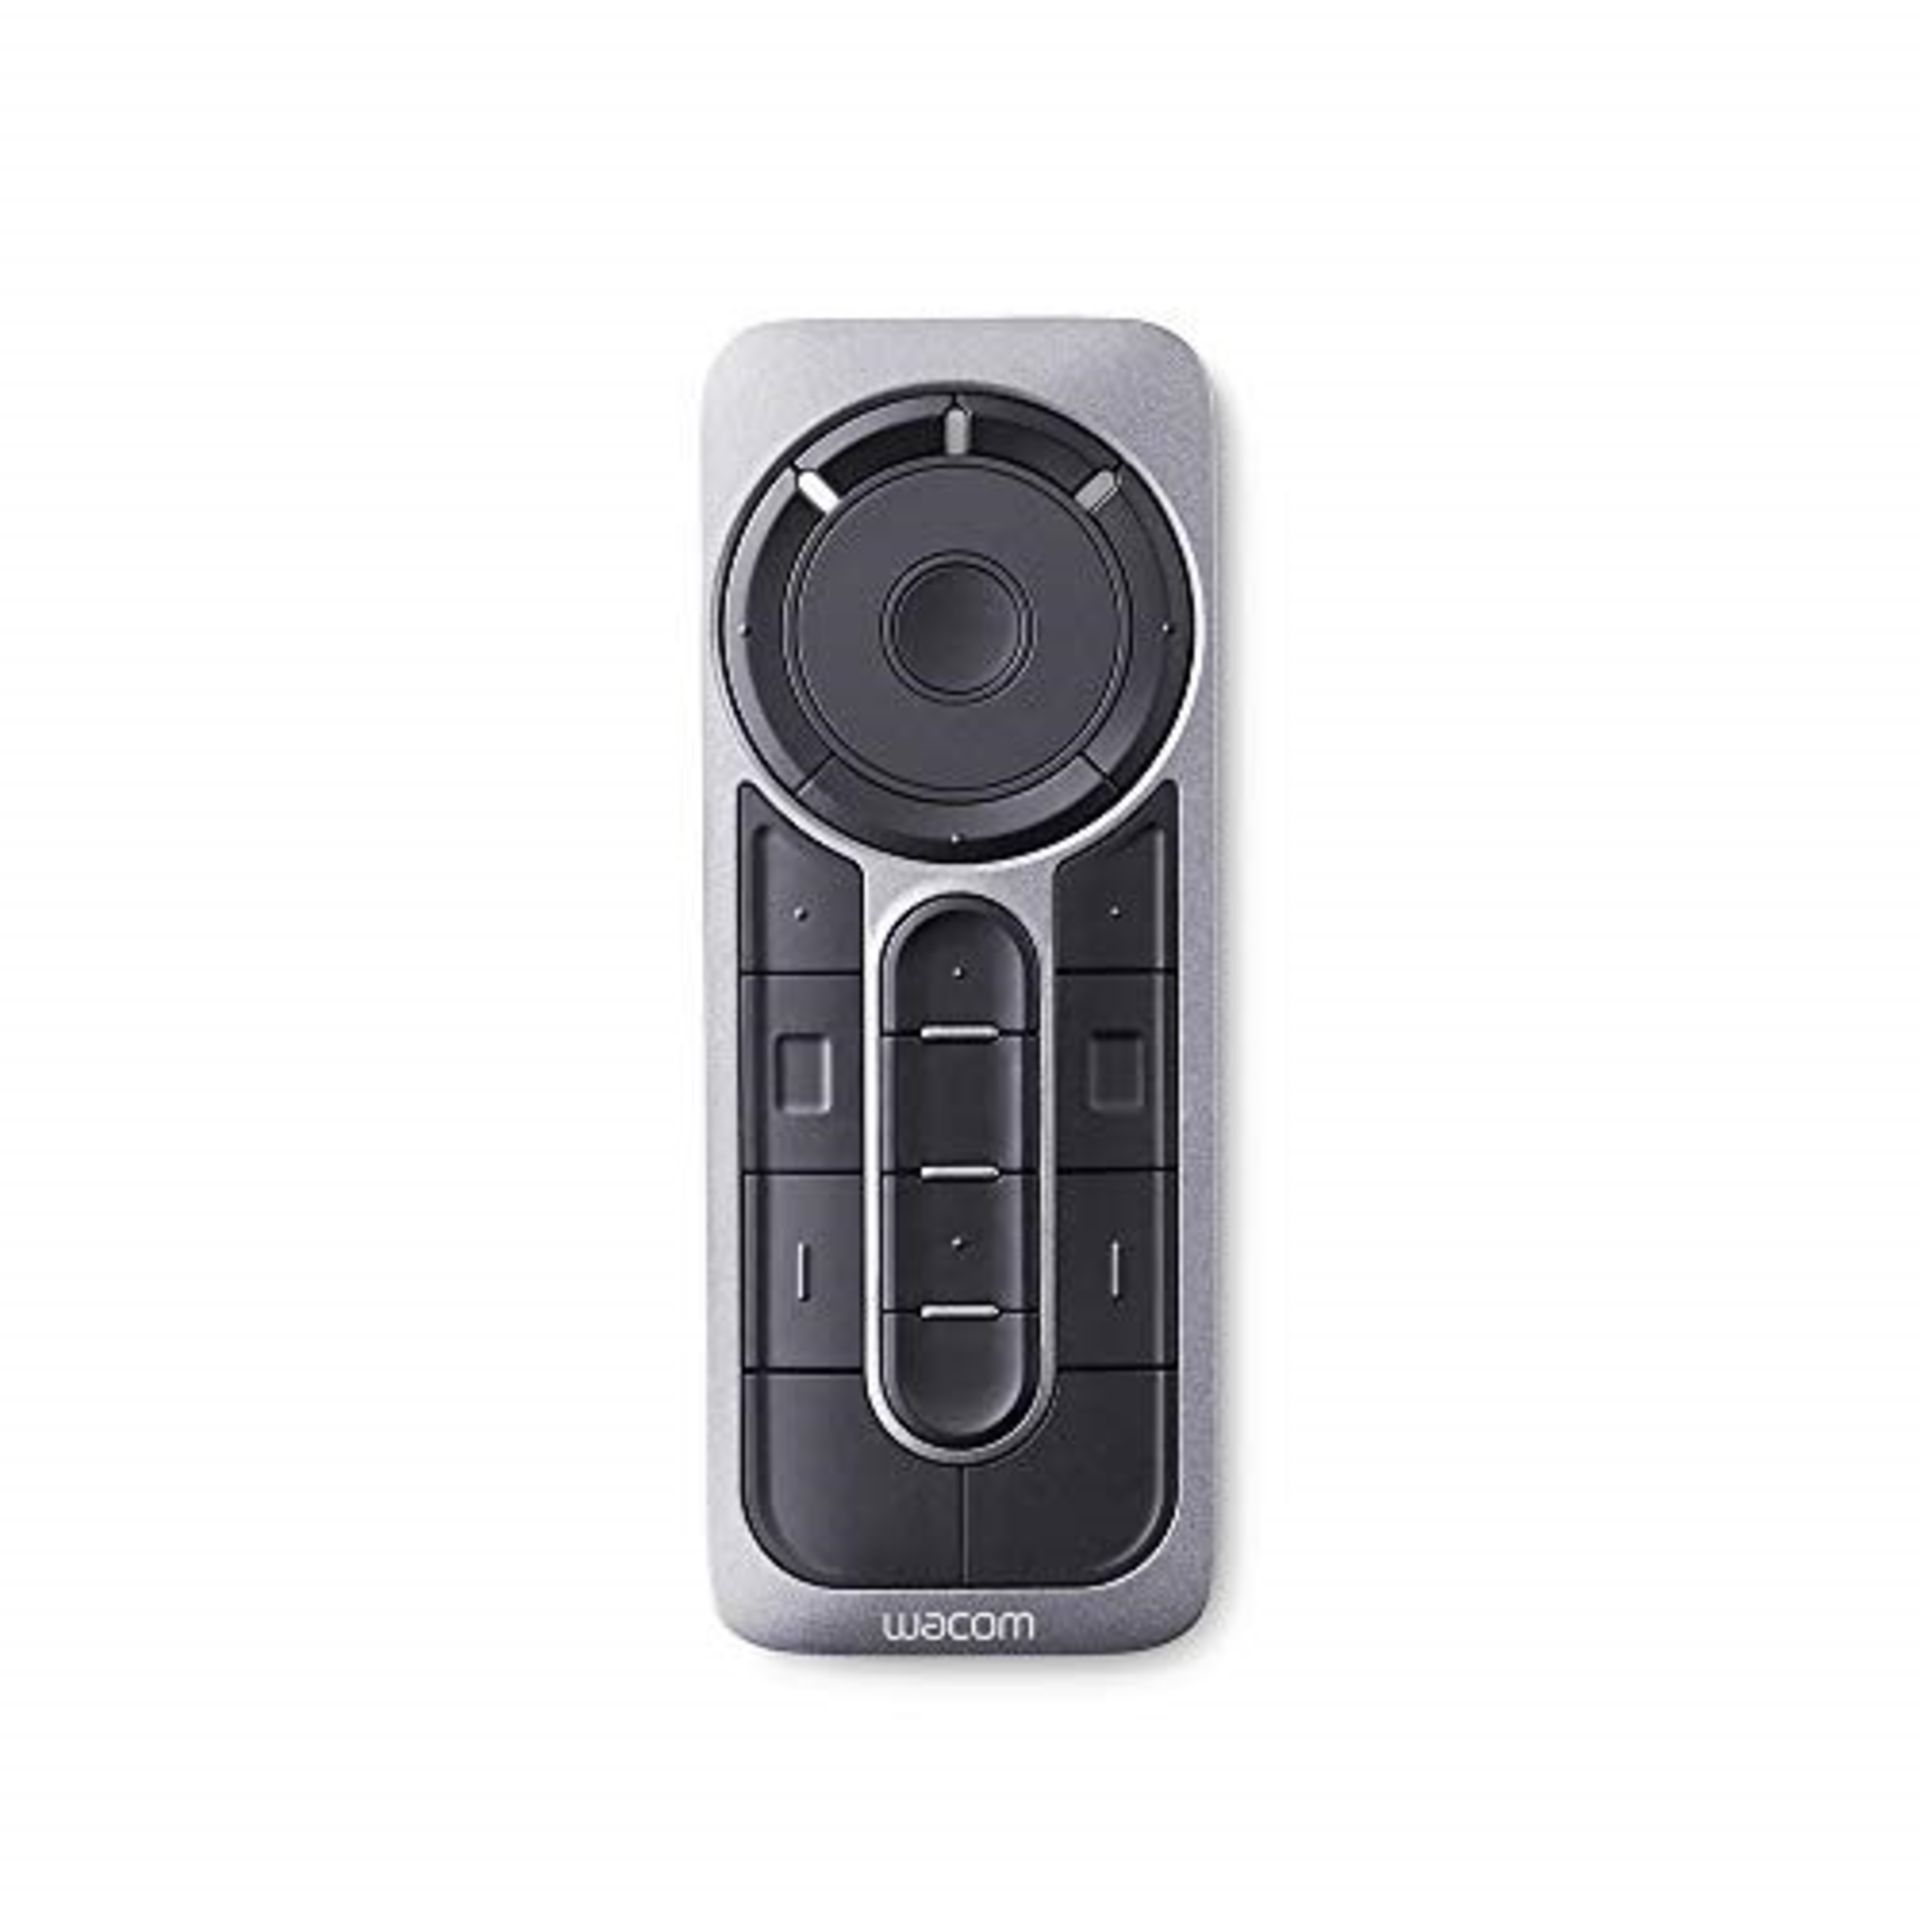 RRP £69.00 Wacom Press buttons Remote Control - Black/Grey, K100826